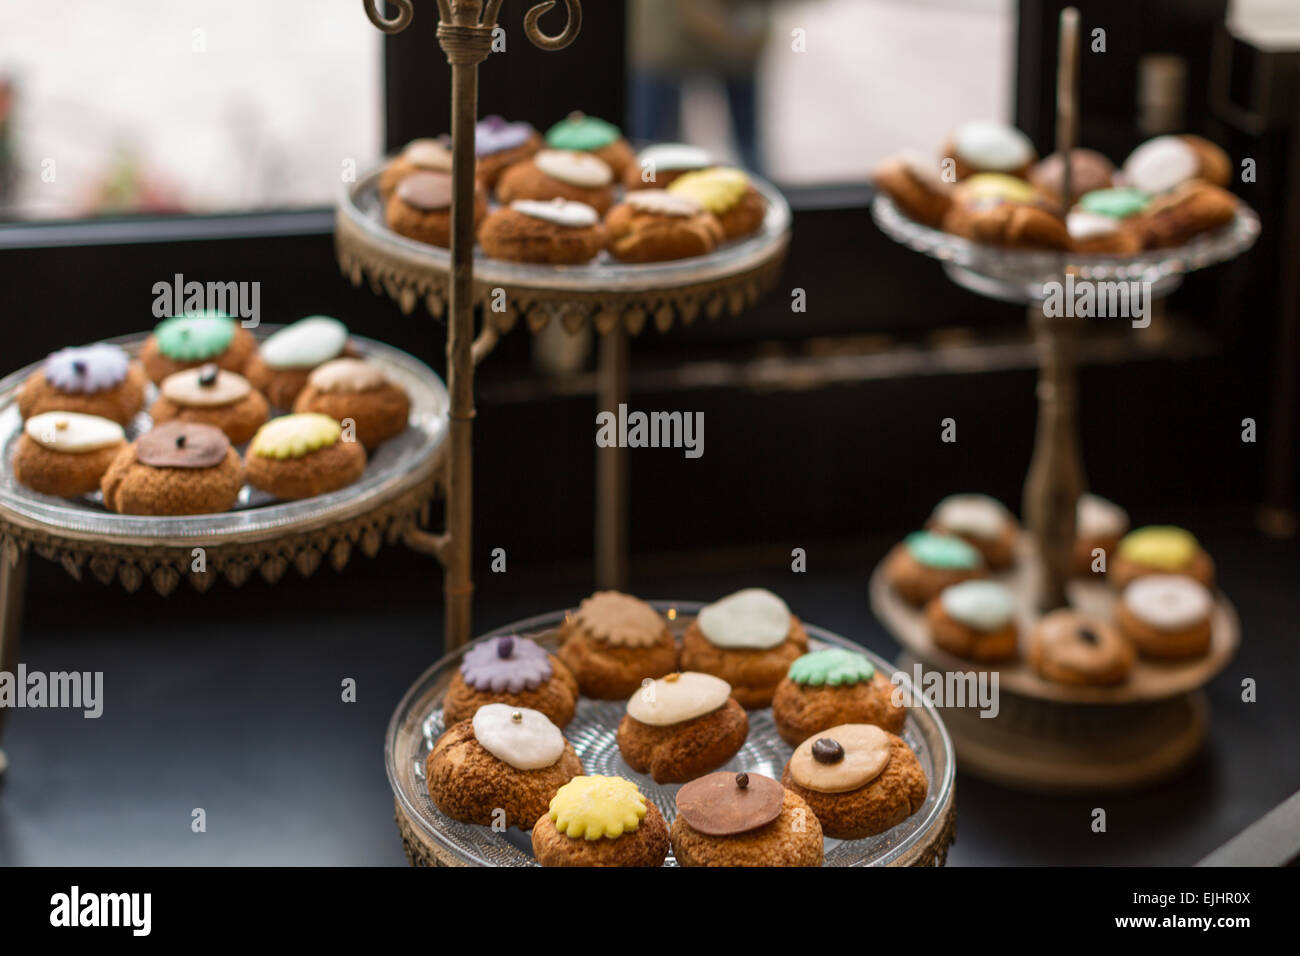 Bignè su piatti, Odette pasticceria, Parigi, Francia Foto Stock